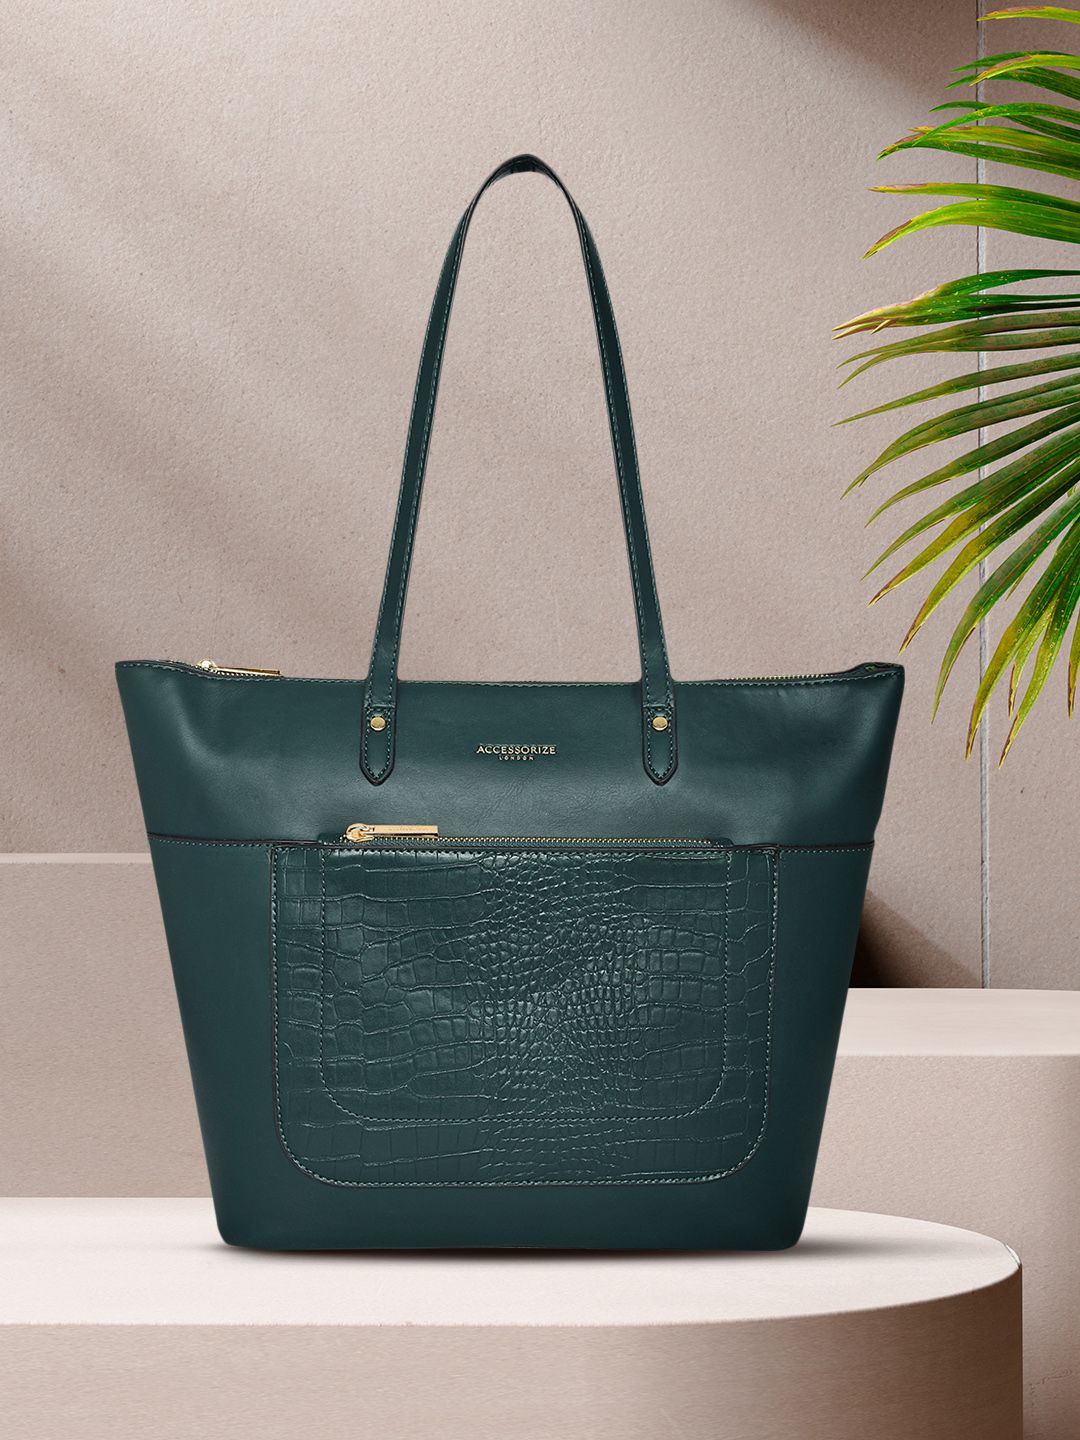 Accessorize Green Croc Textured Shoulder Bag Price in India